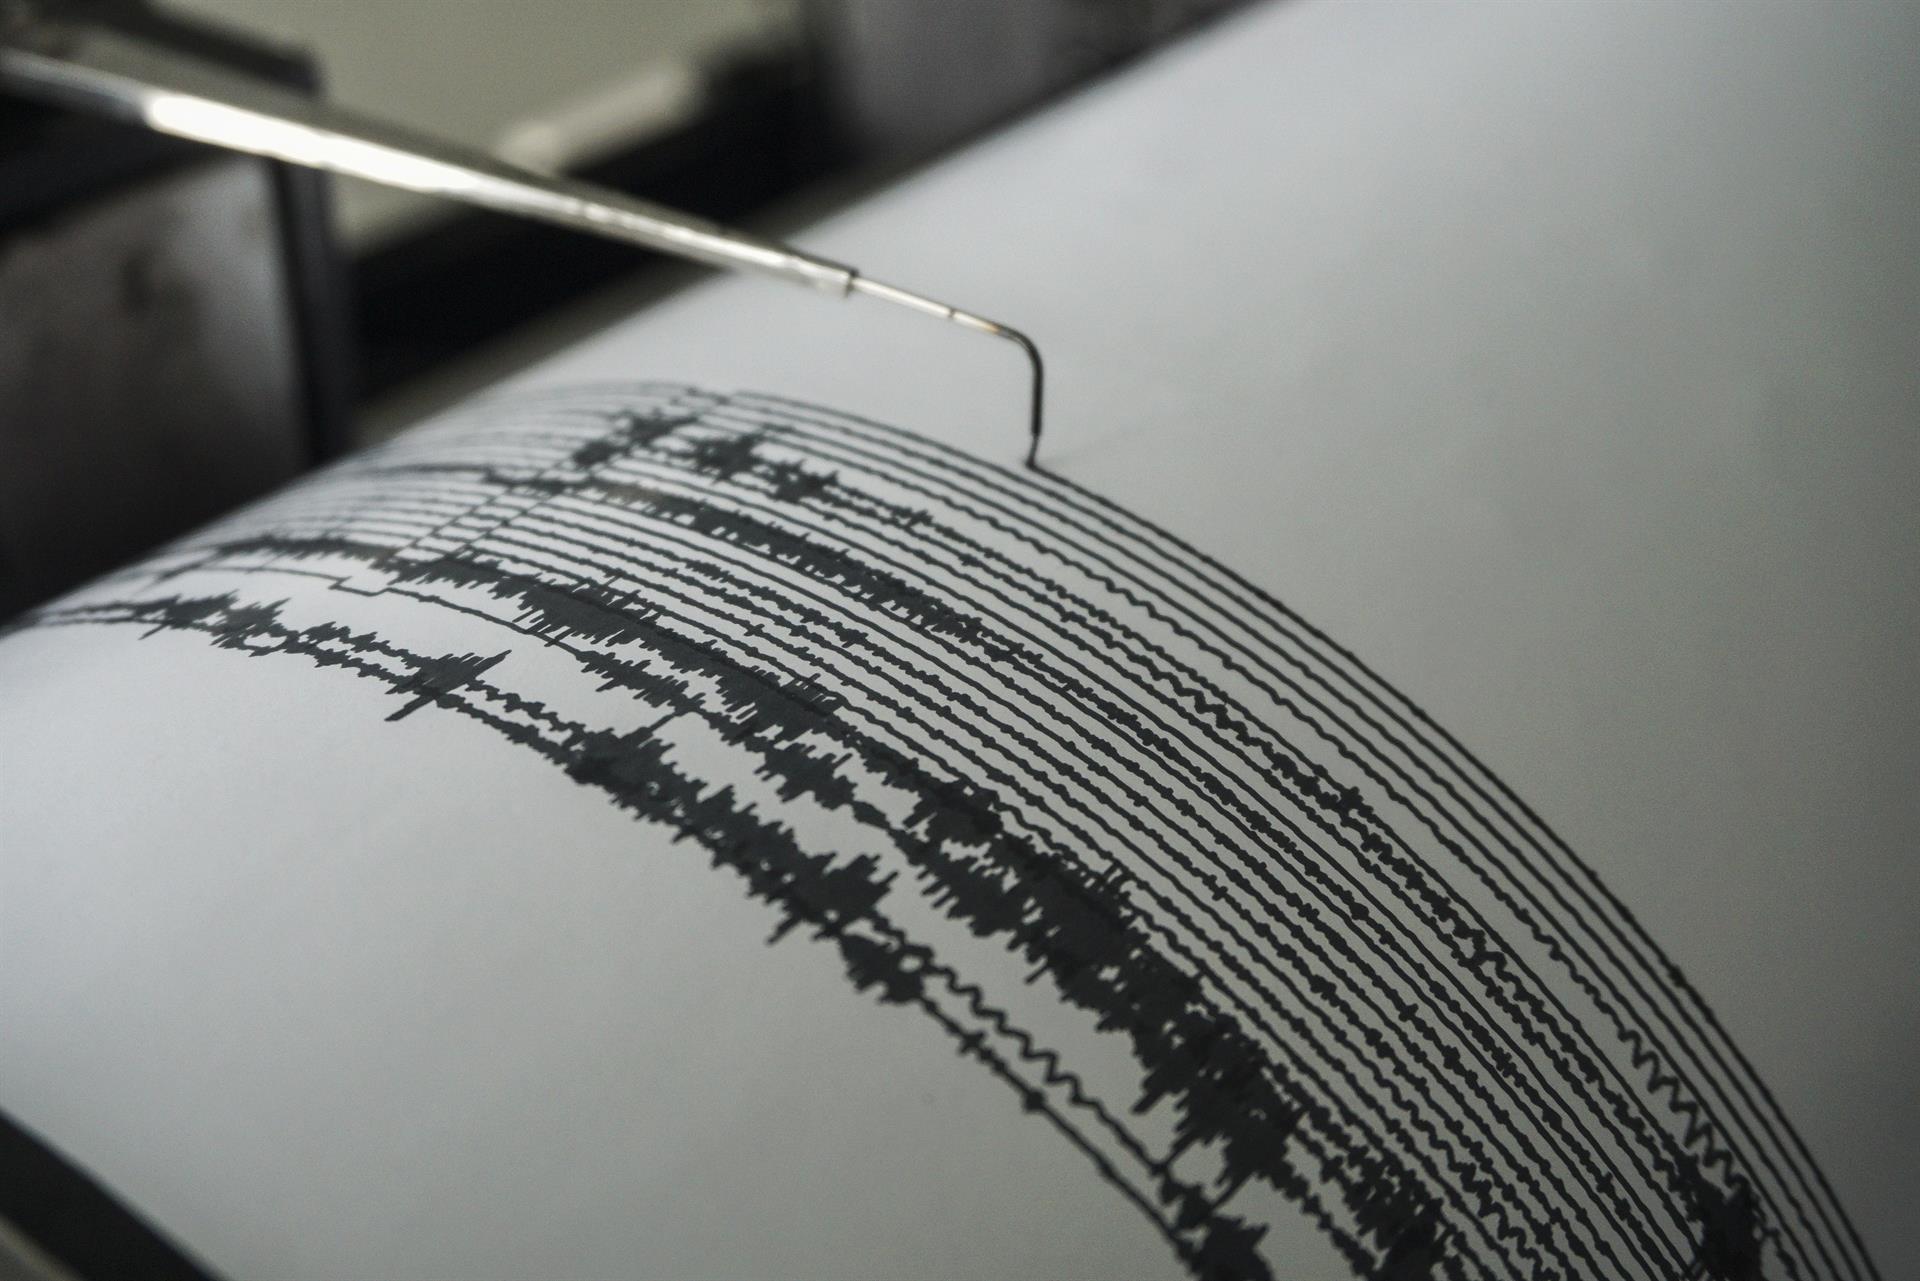 Sismo de magnitud 5.2 se registró cerca de la costa de Nicaragua este #28Jul